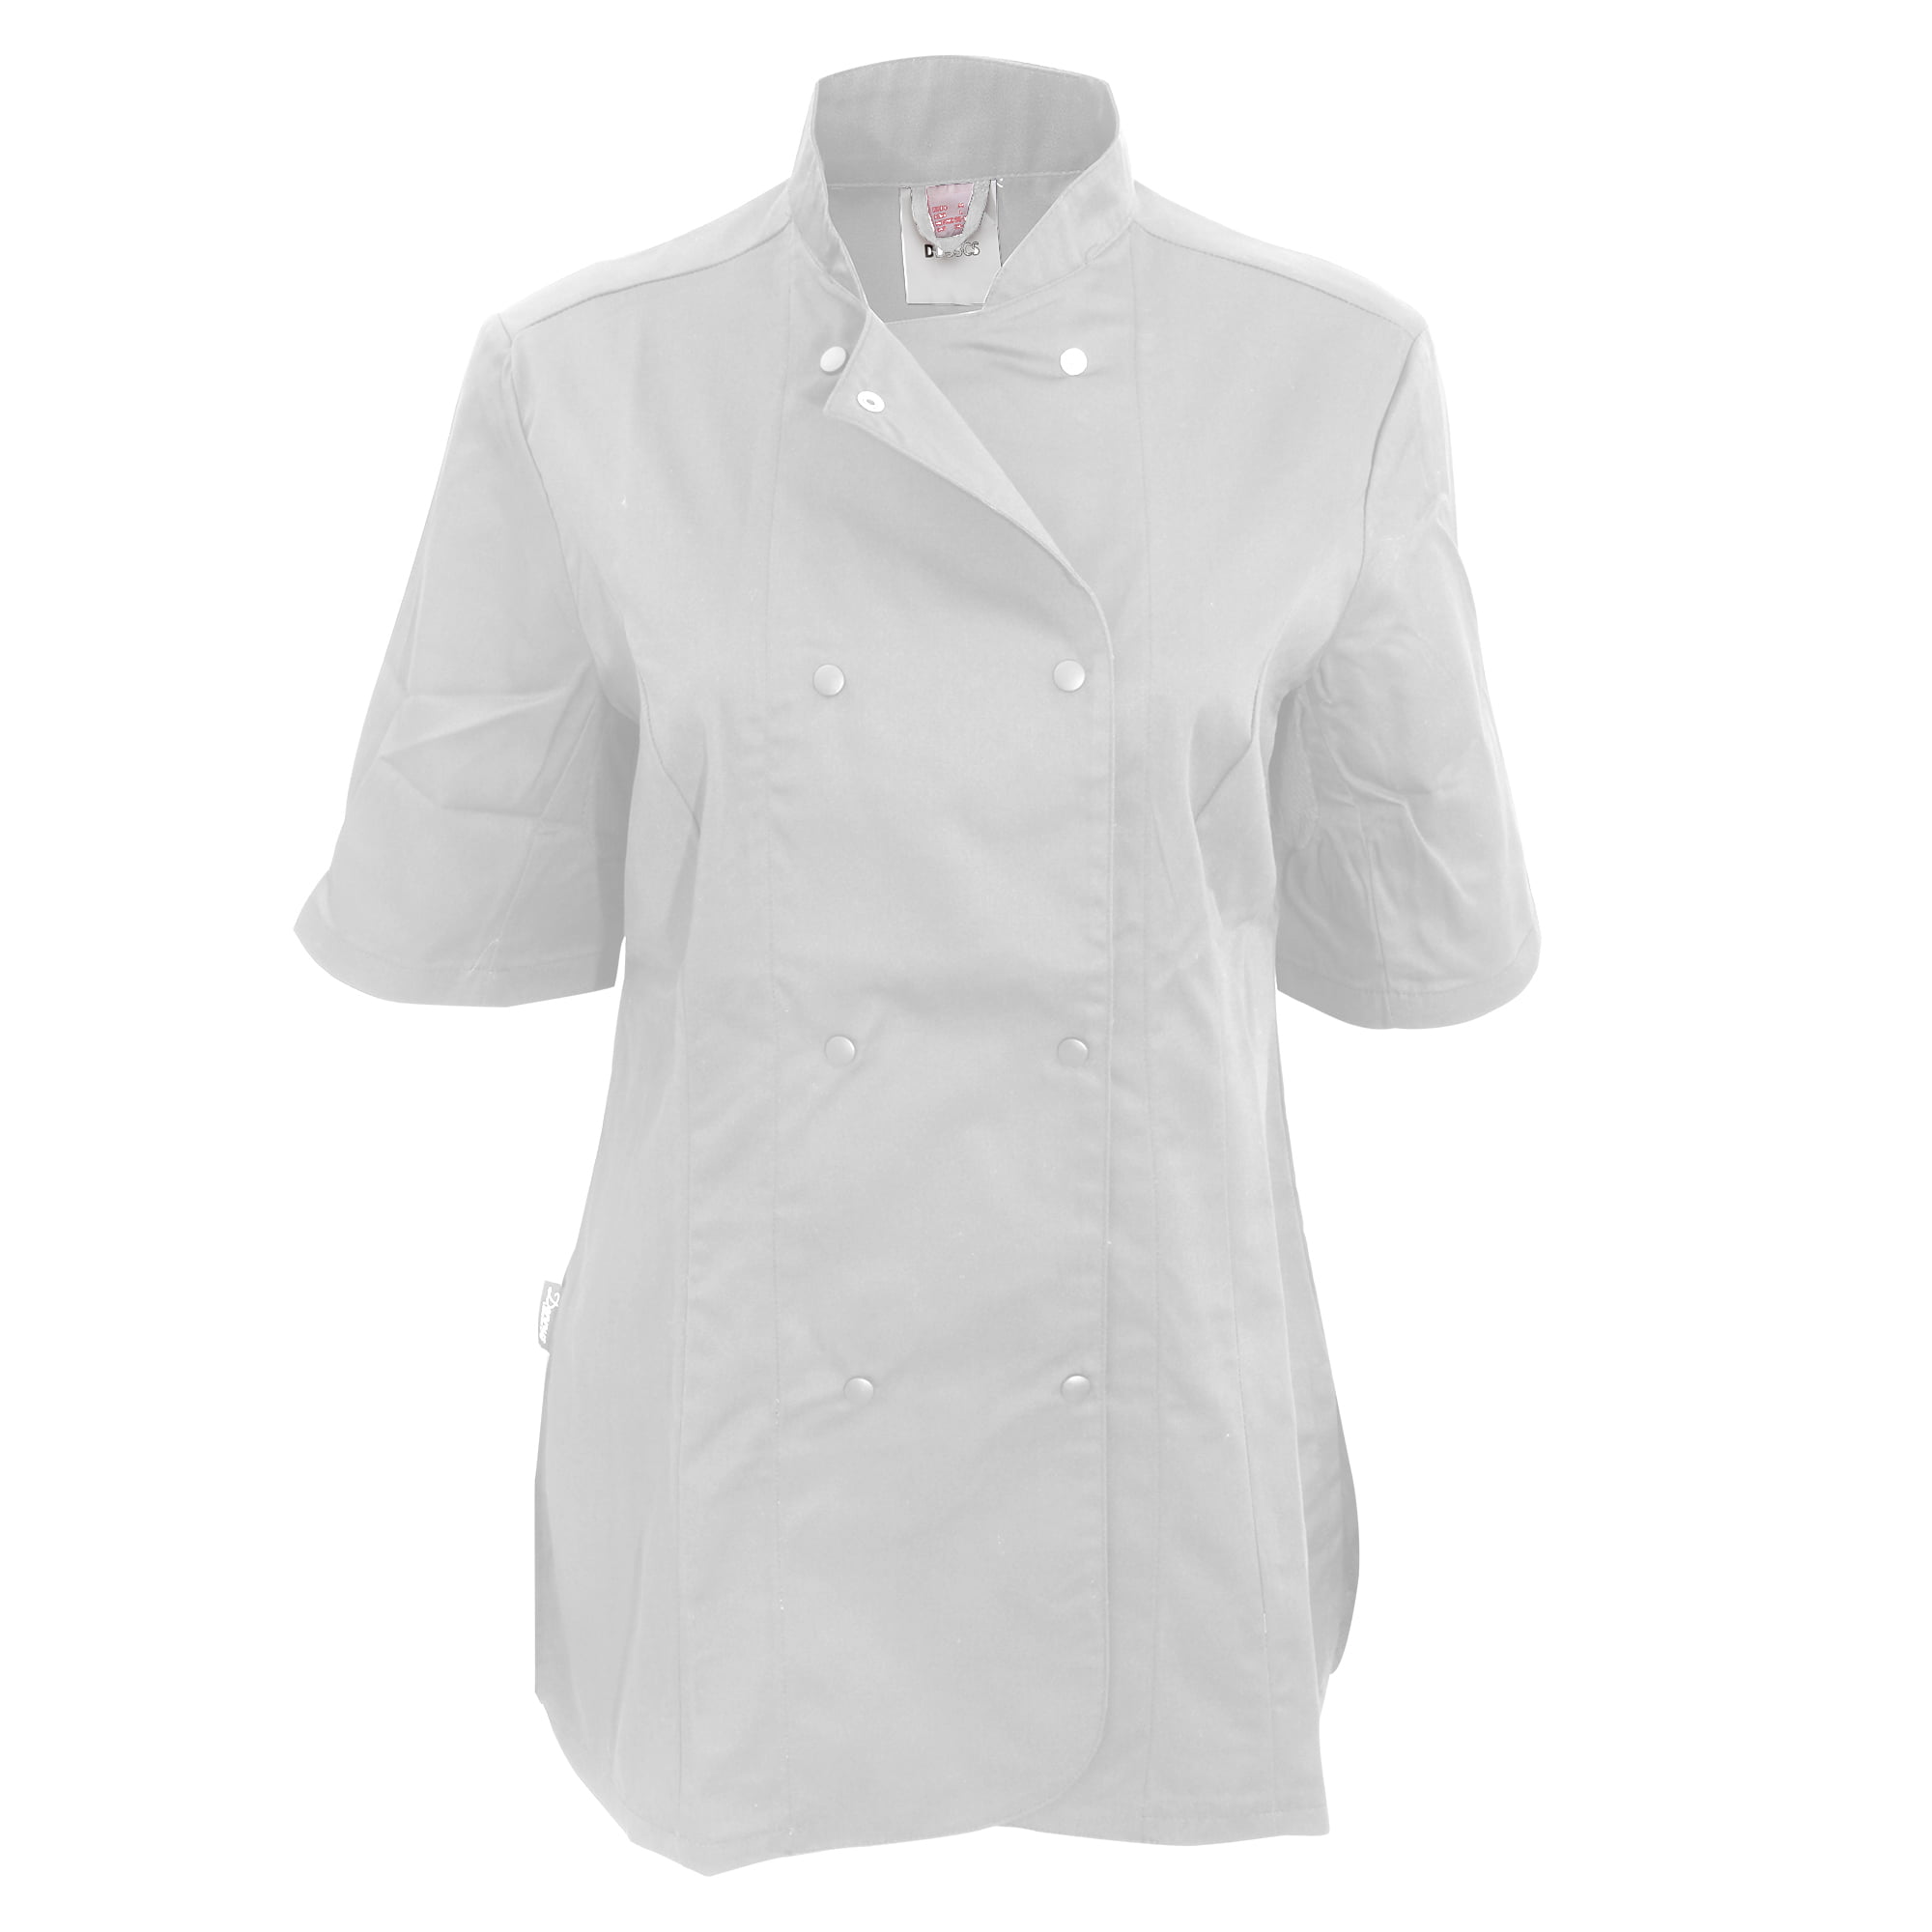 Denny's Chef Jacket White Size XXL  Brand New 